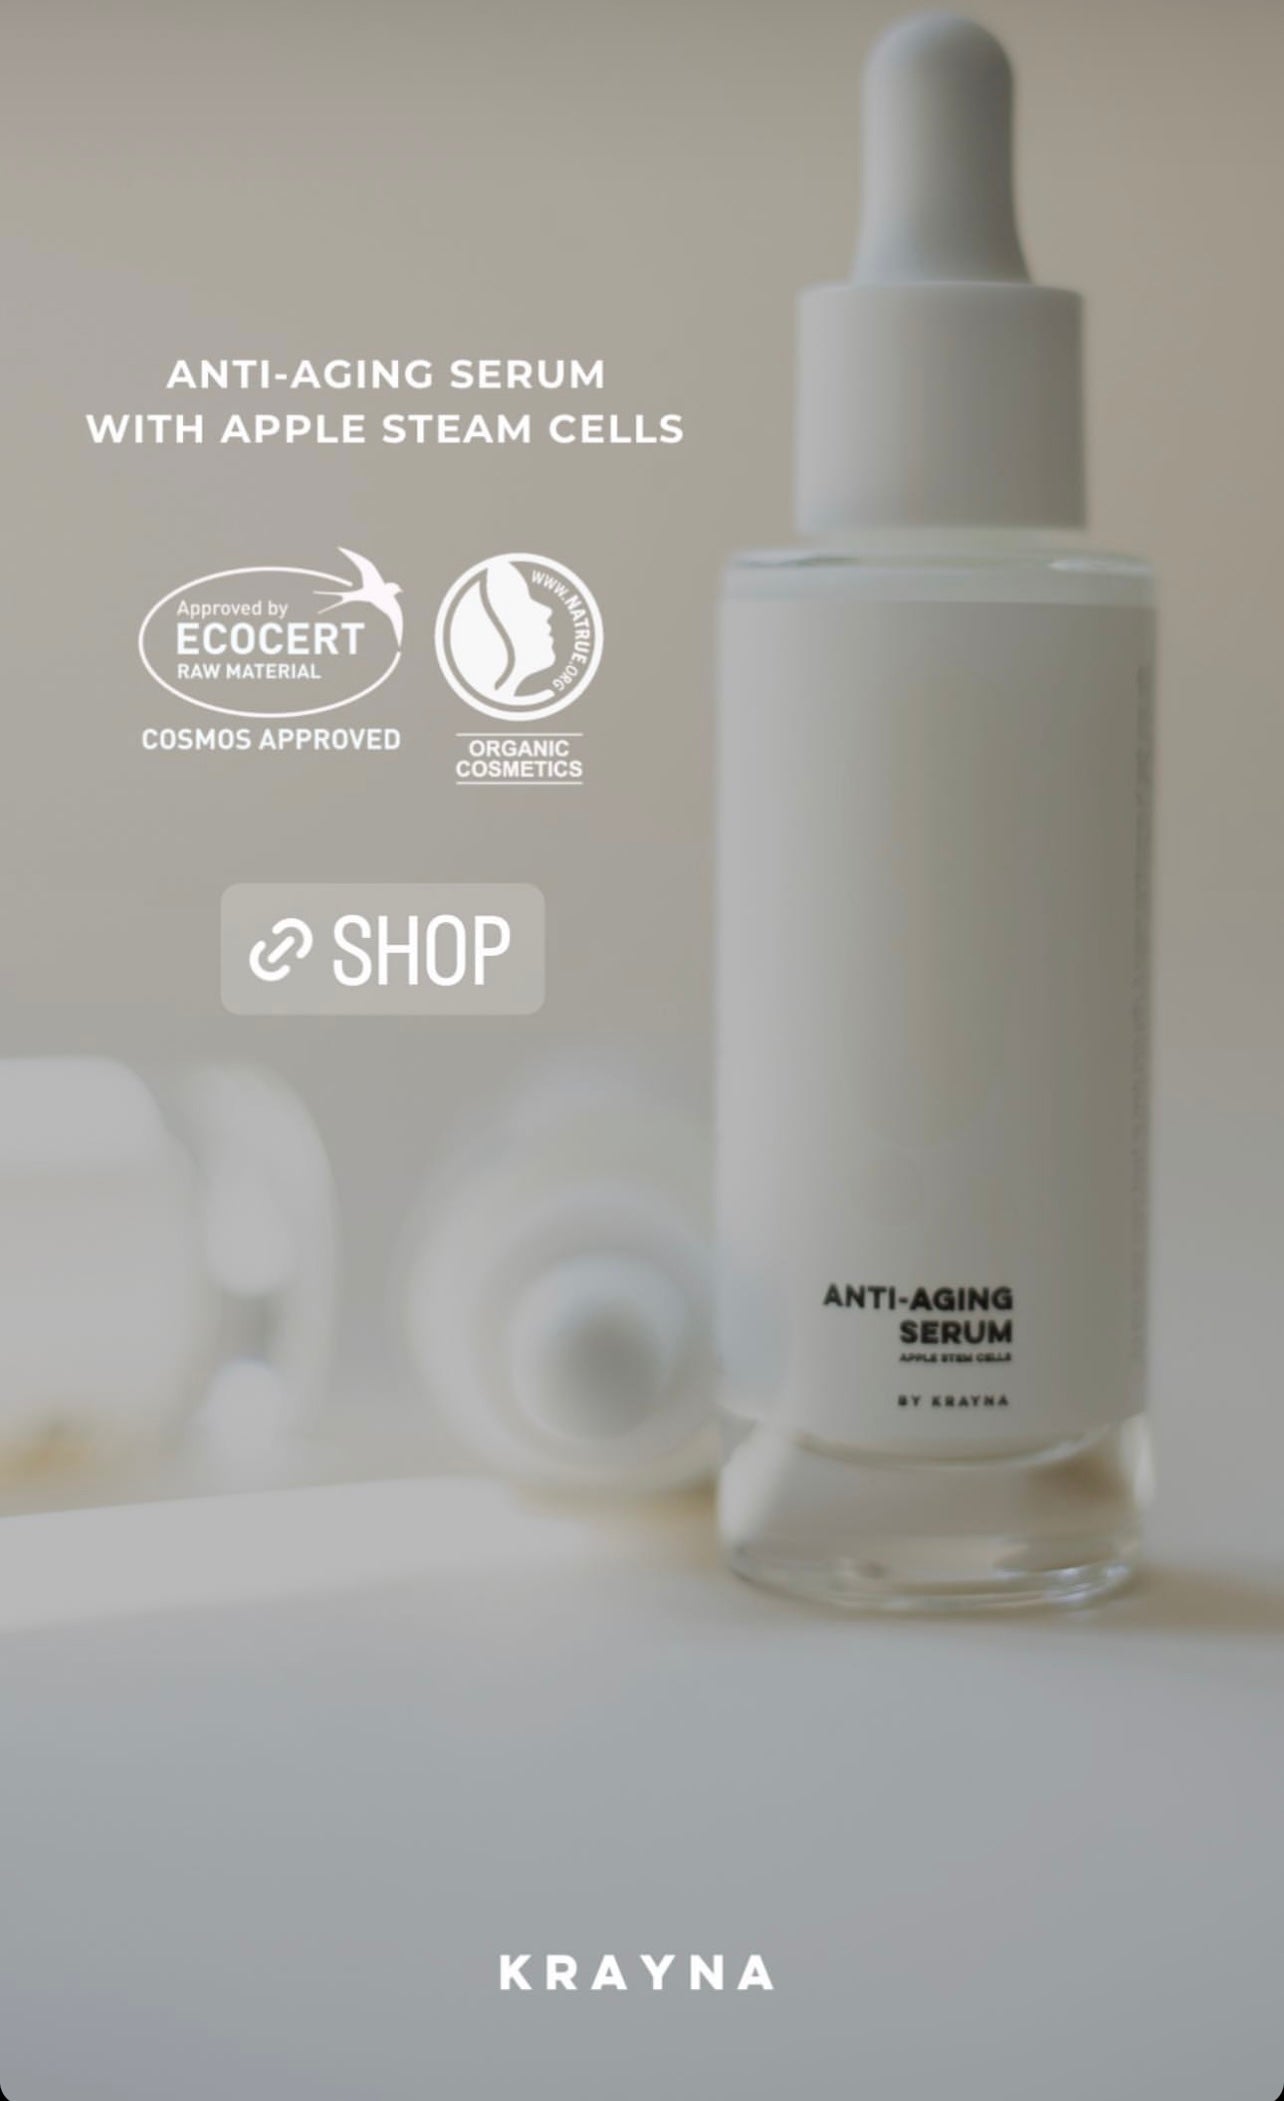 Anti-aging serum apple stem cells Krayna